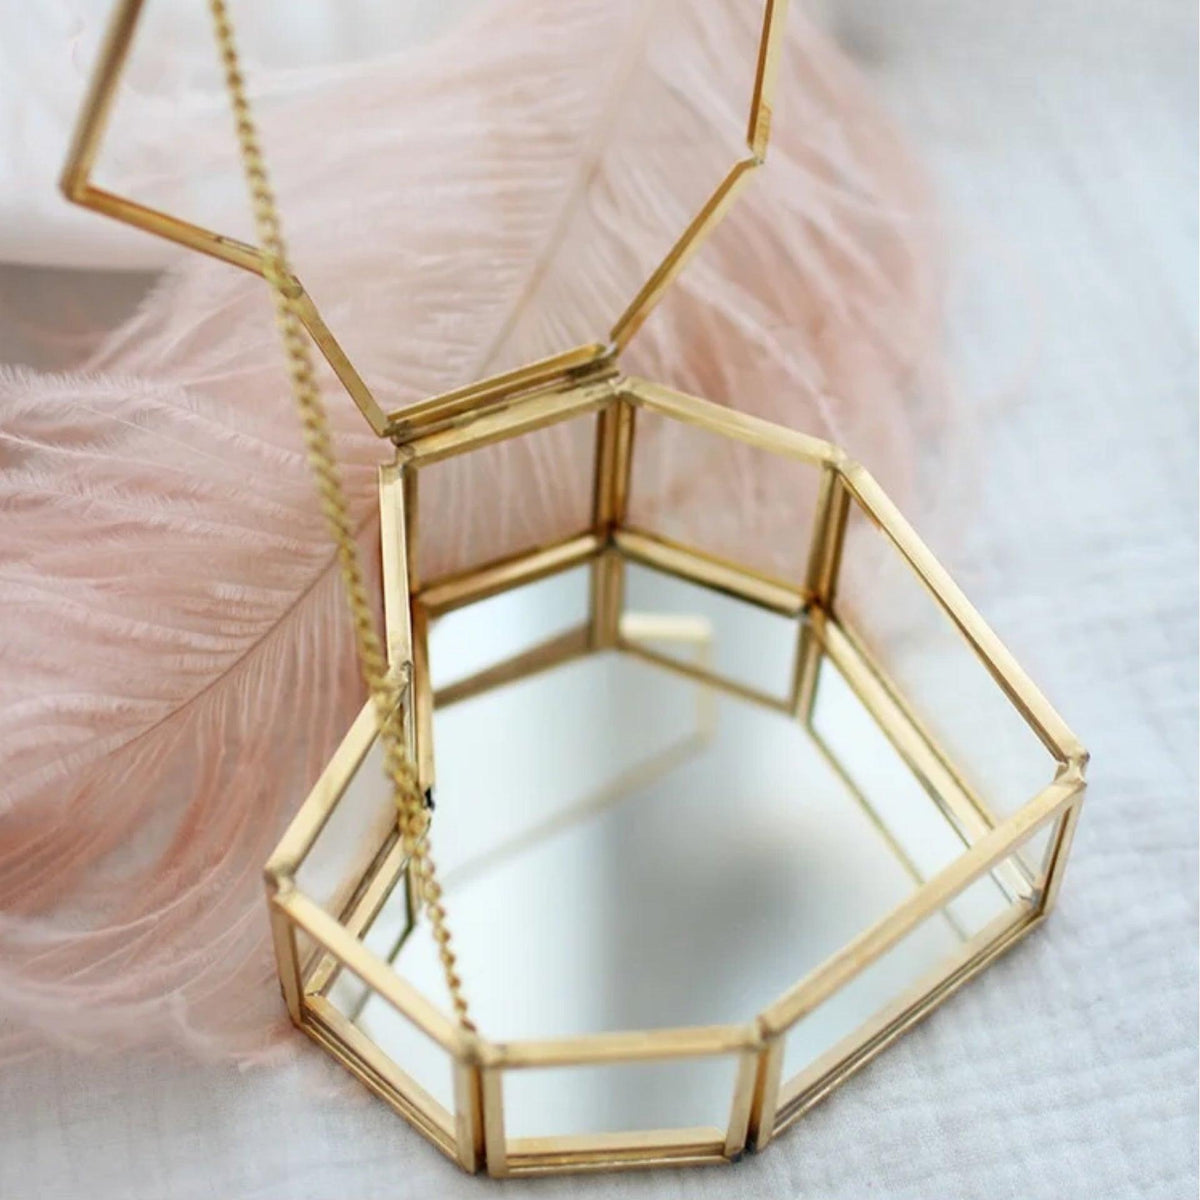 Glass Heart Jewelry Box